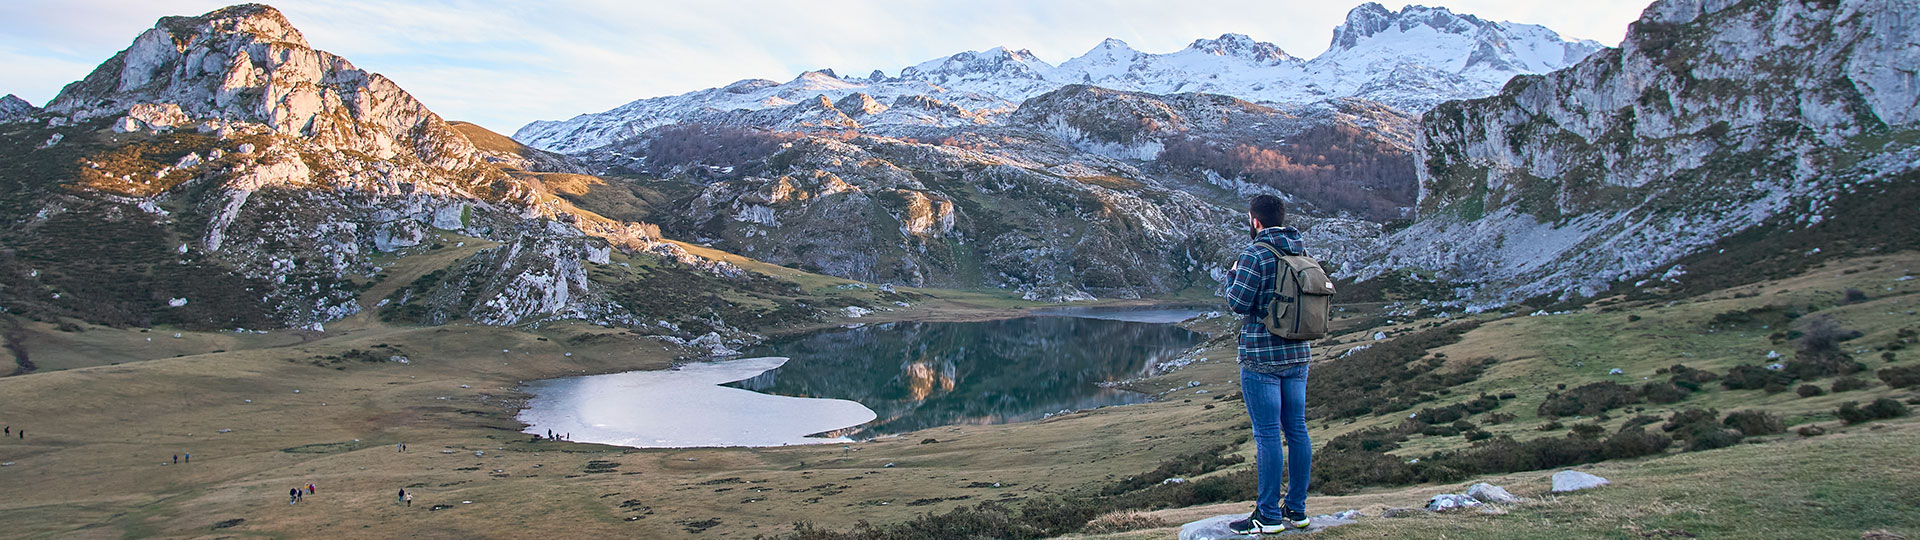 The Covadonga Lakes in Picos de Europa National Park, Asturias